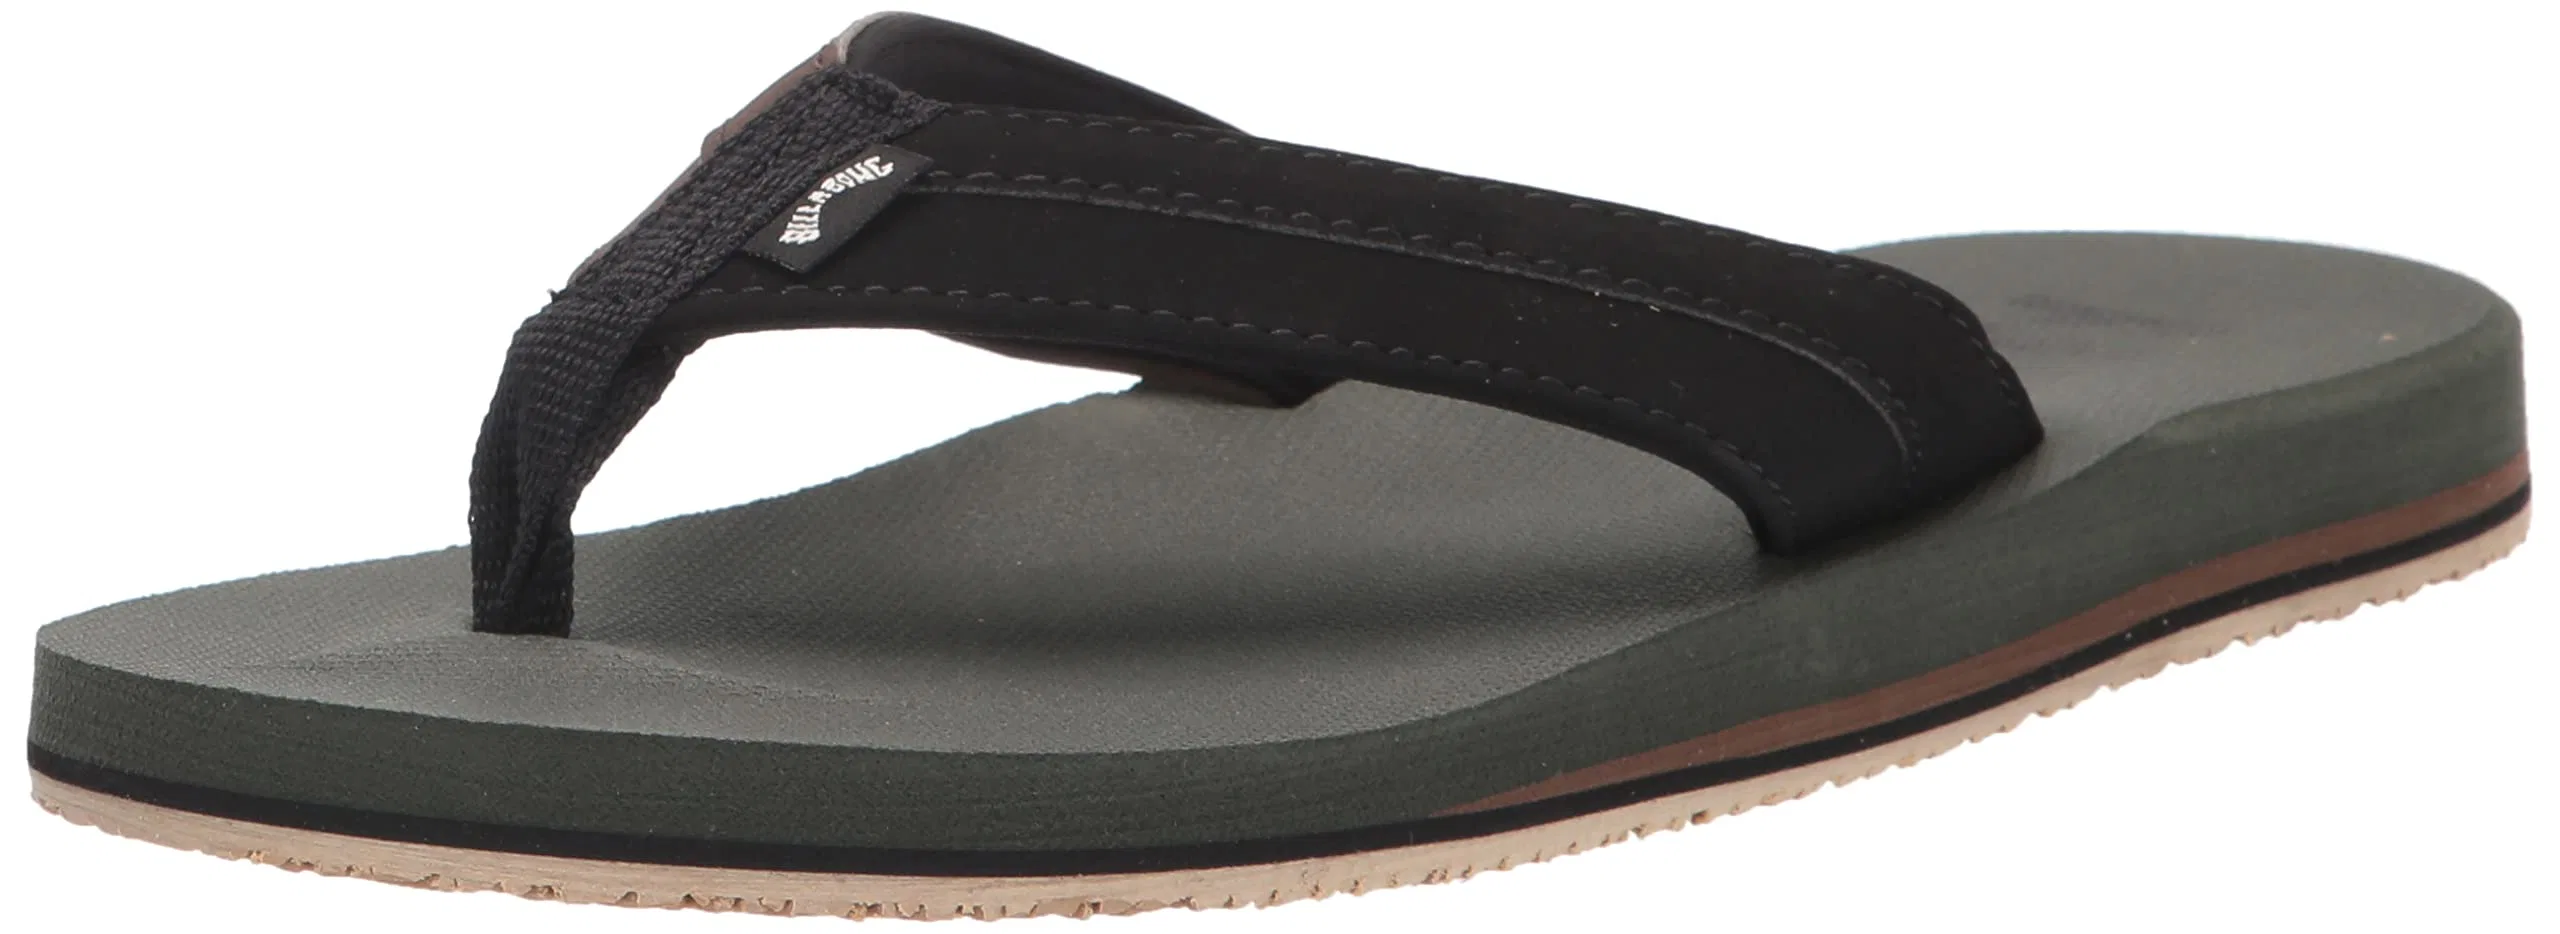 Anti-Slippery Hard-Wearing Sansd bolsa de plástico/Caja Playa sandalias zapatos de material de espuma EVA